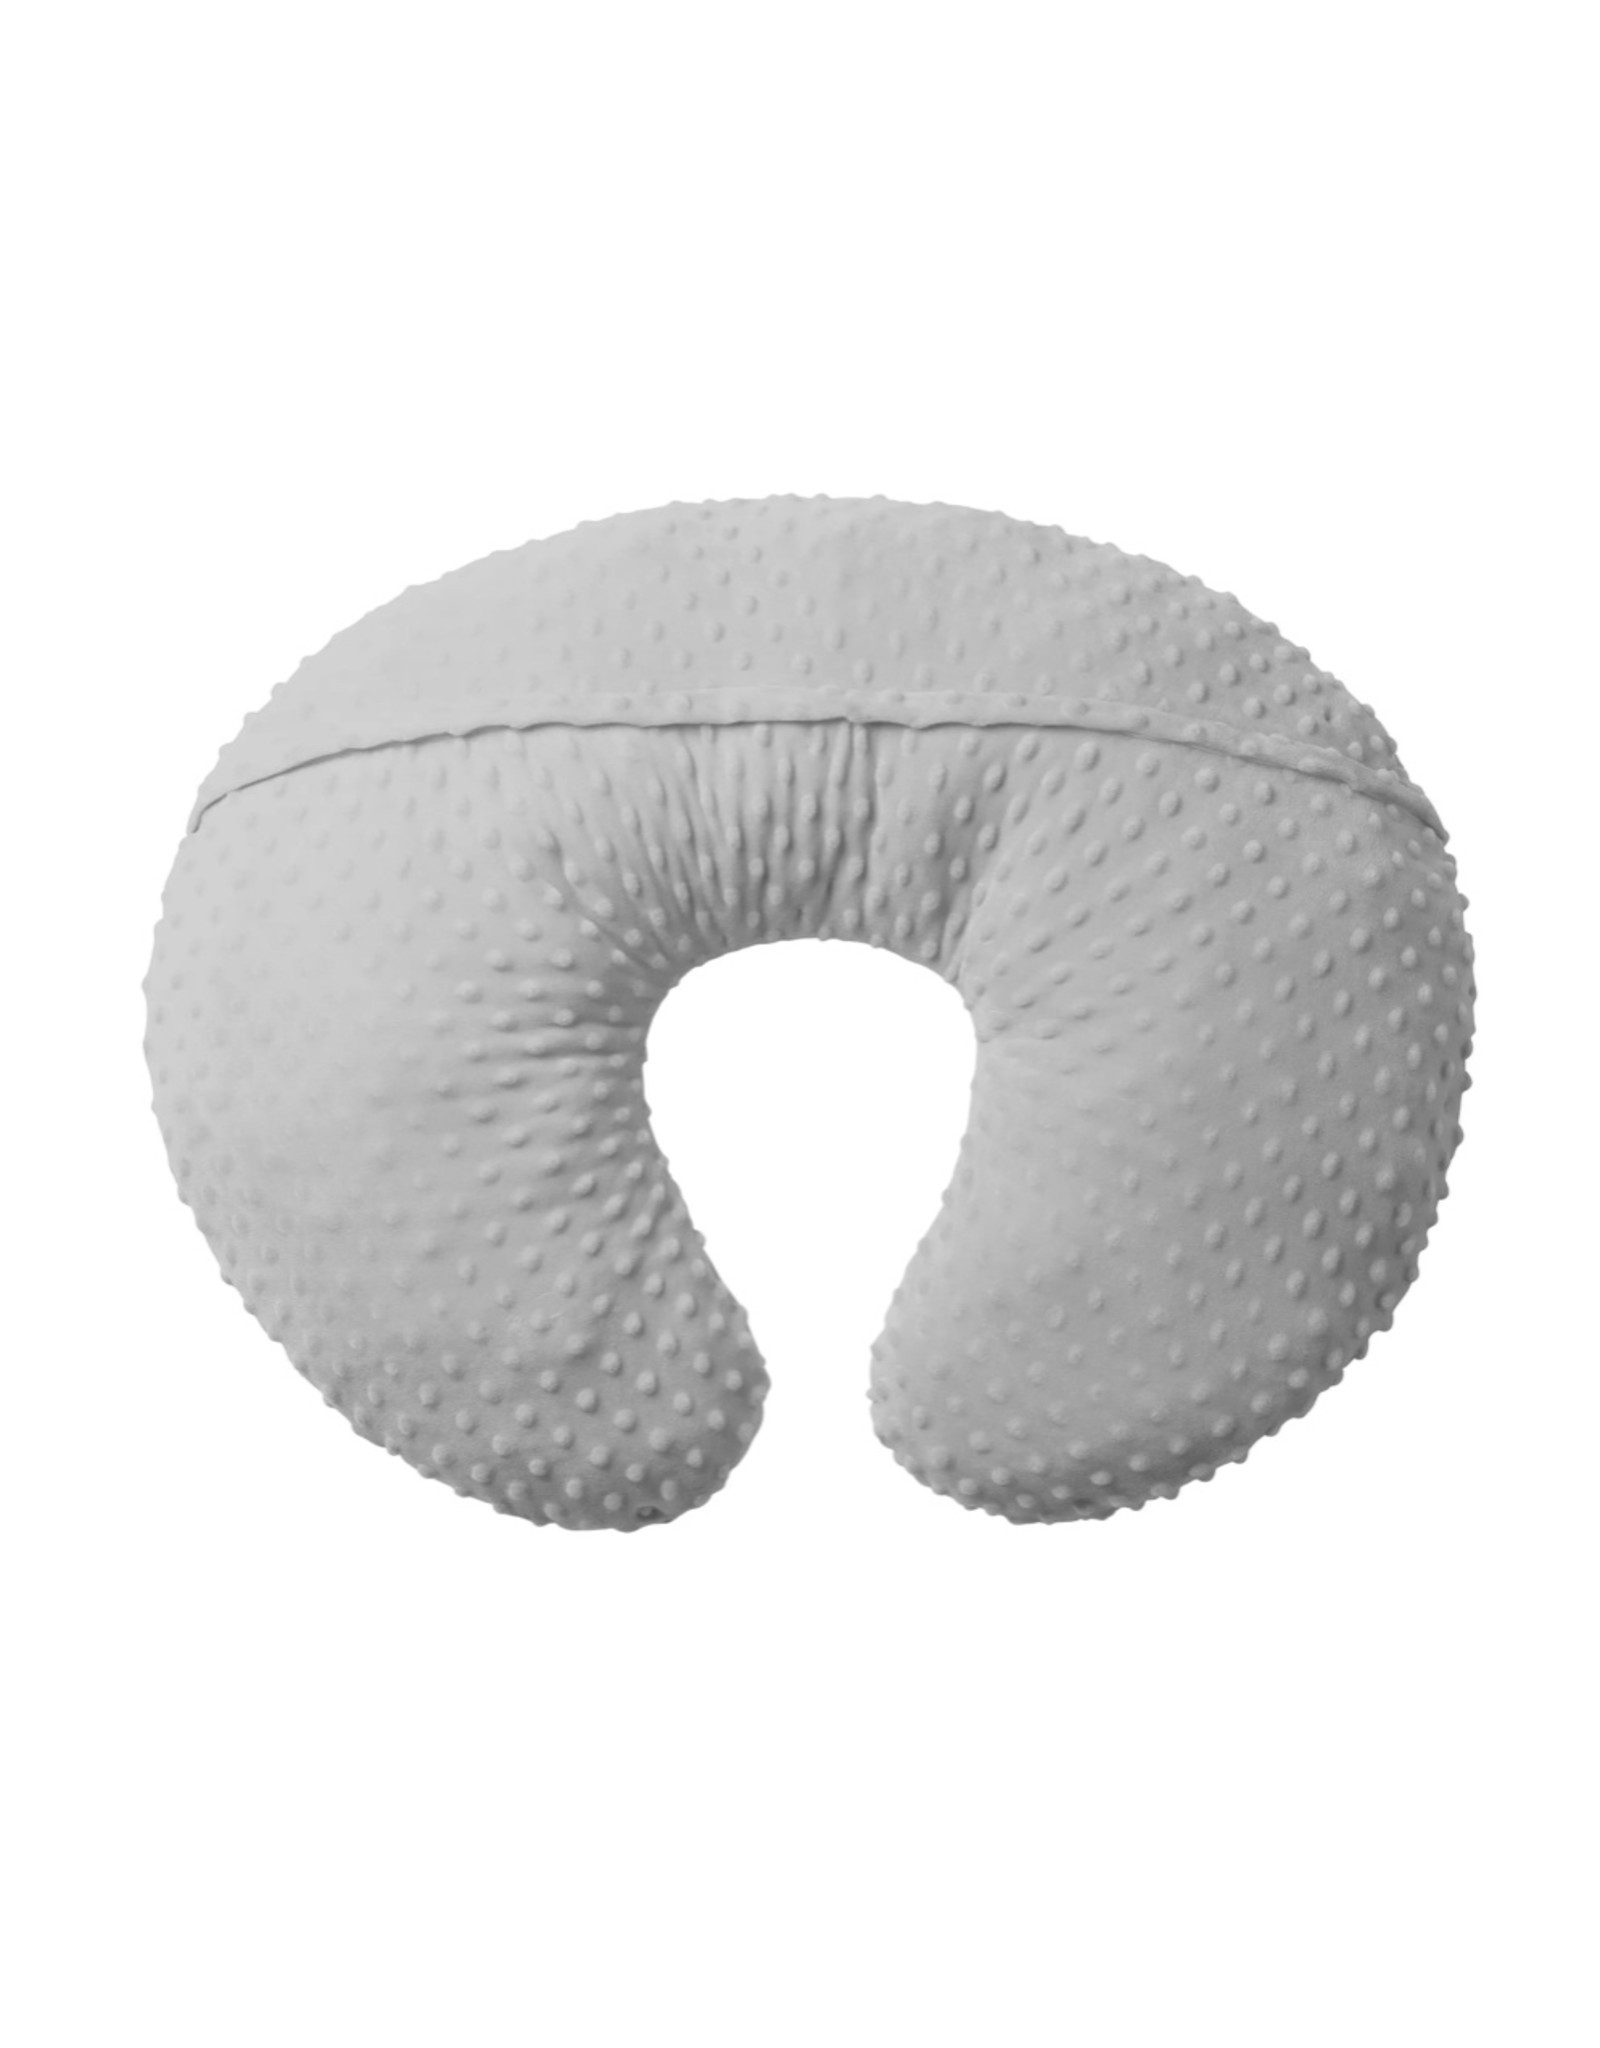 JLIKA, Nursing Pillow Cover, 100% Cotton, Grey Arrows